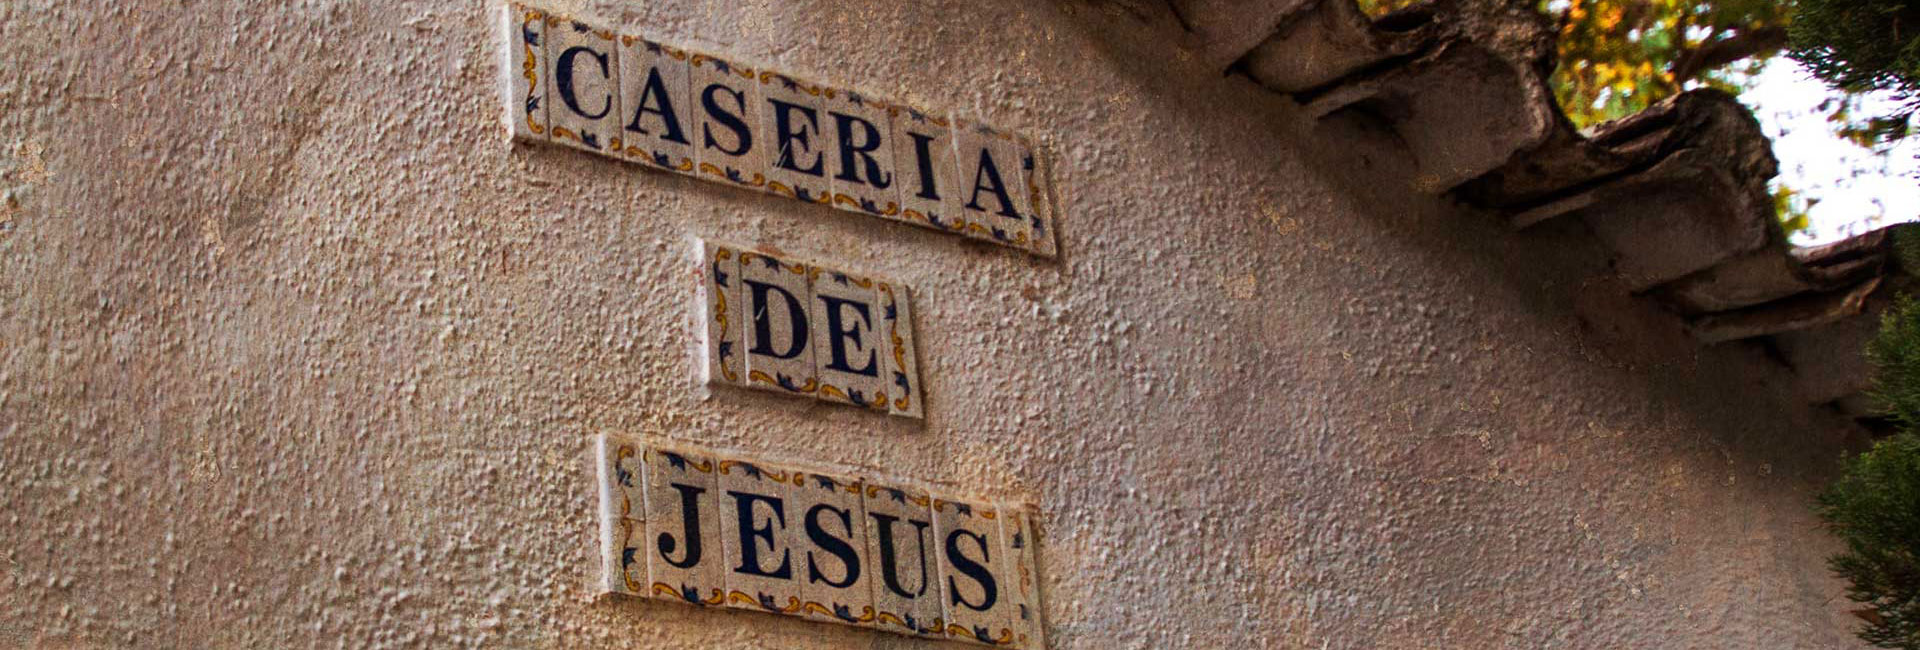 003 Caseria De Jesus